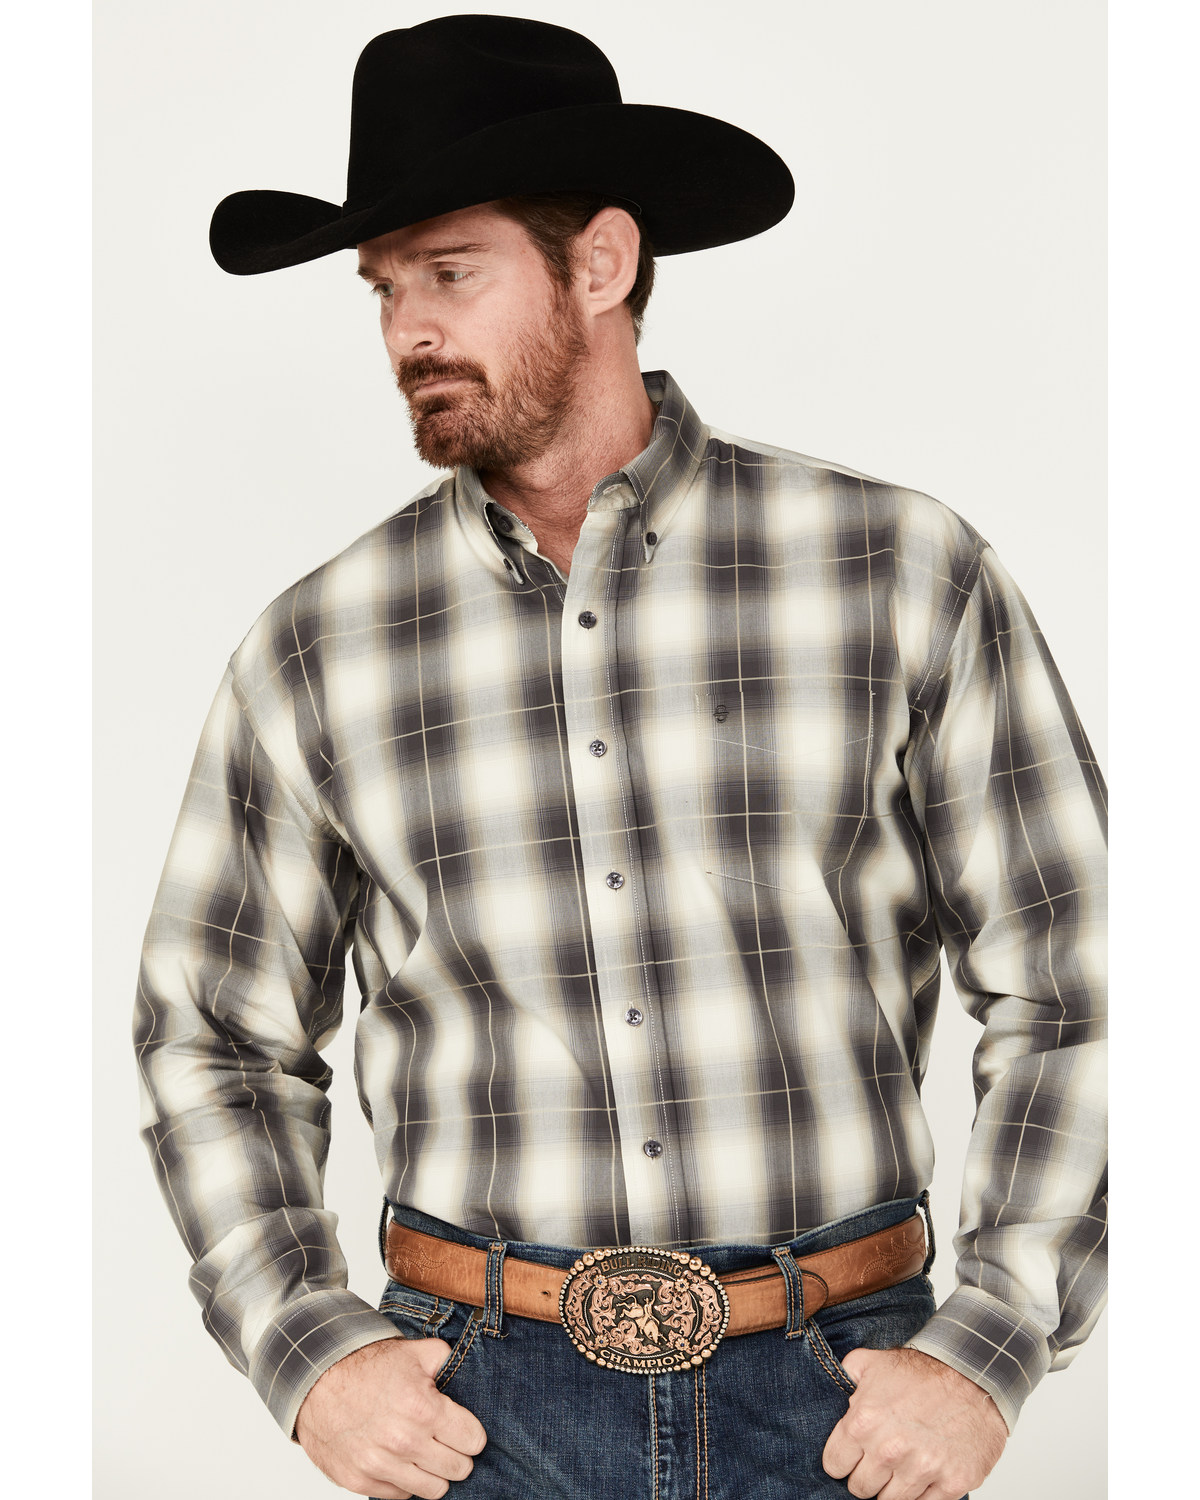 Stetson Men's Plaid Print Long Sleeve Button Down Western Shirt